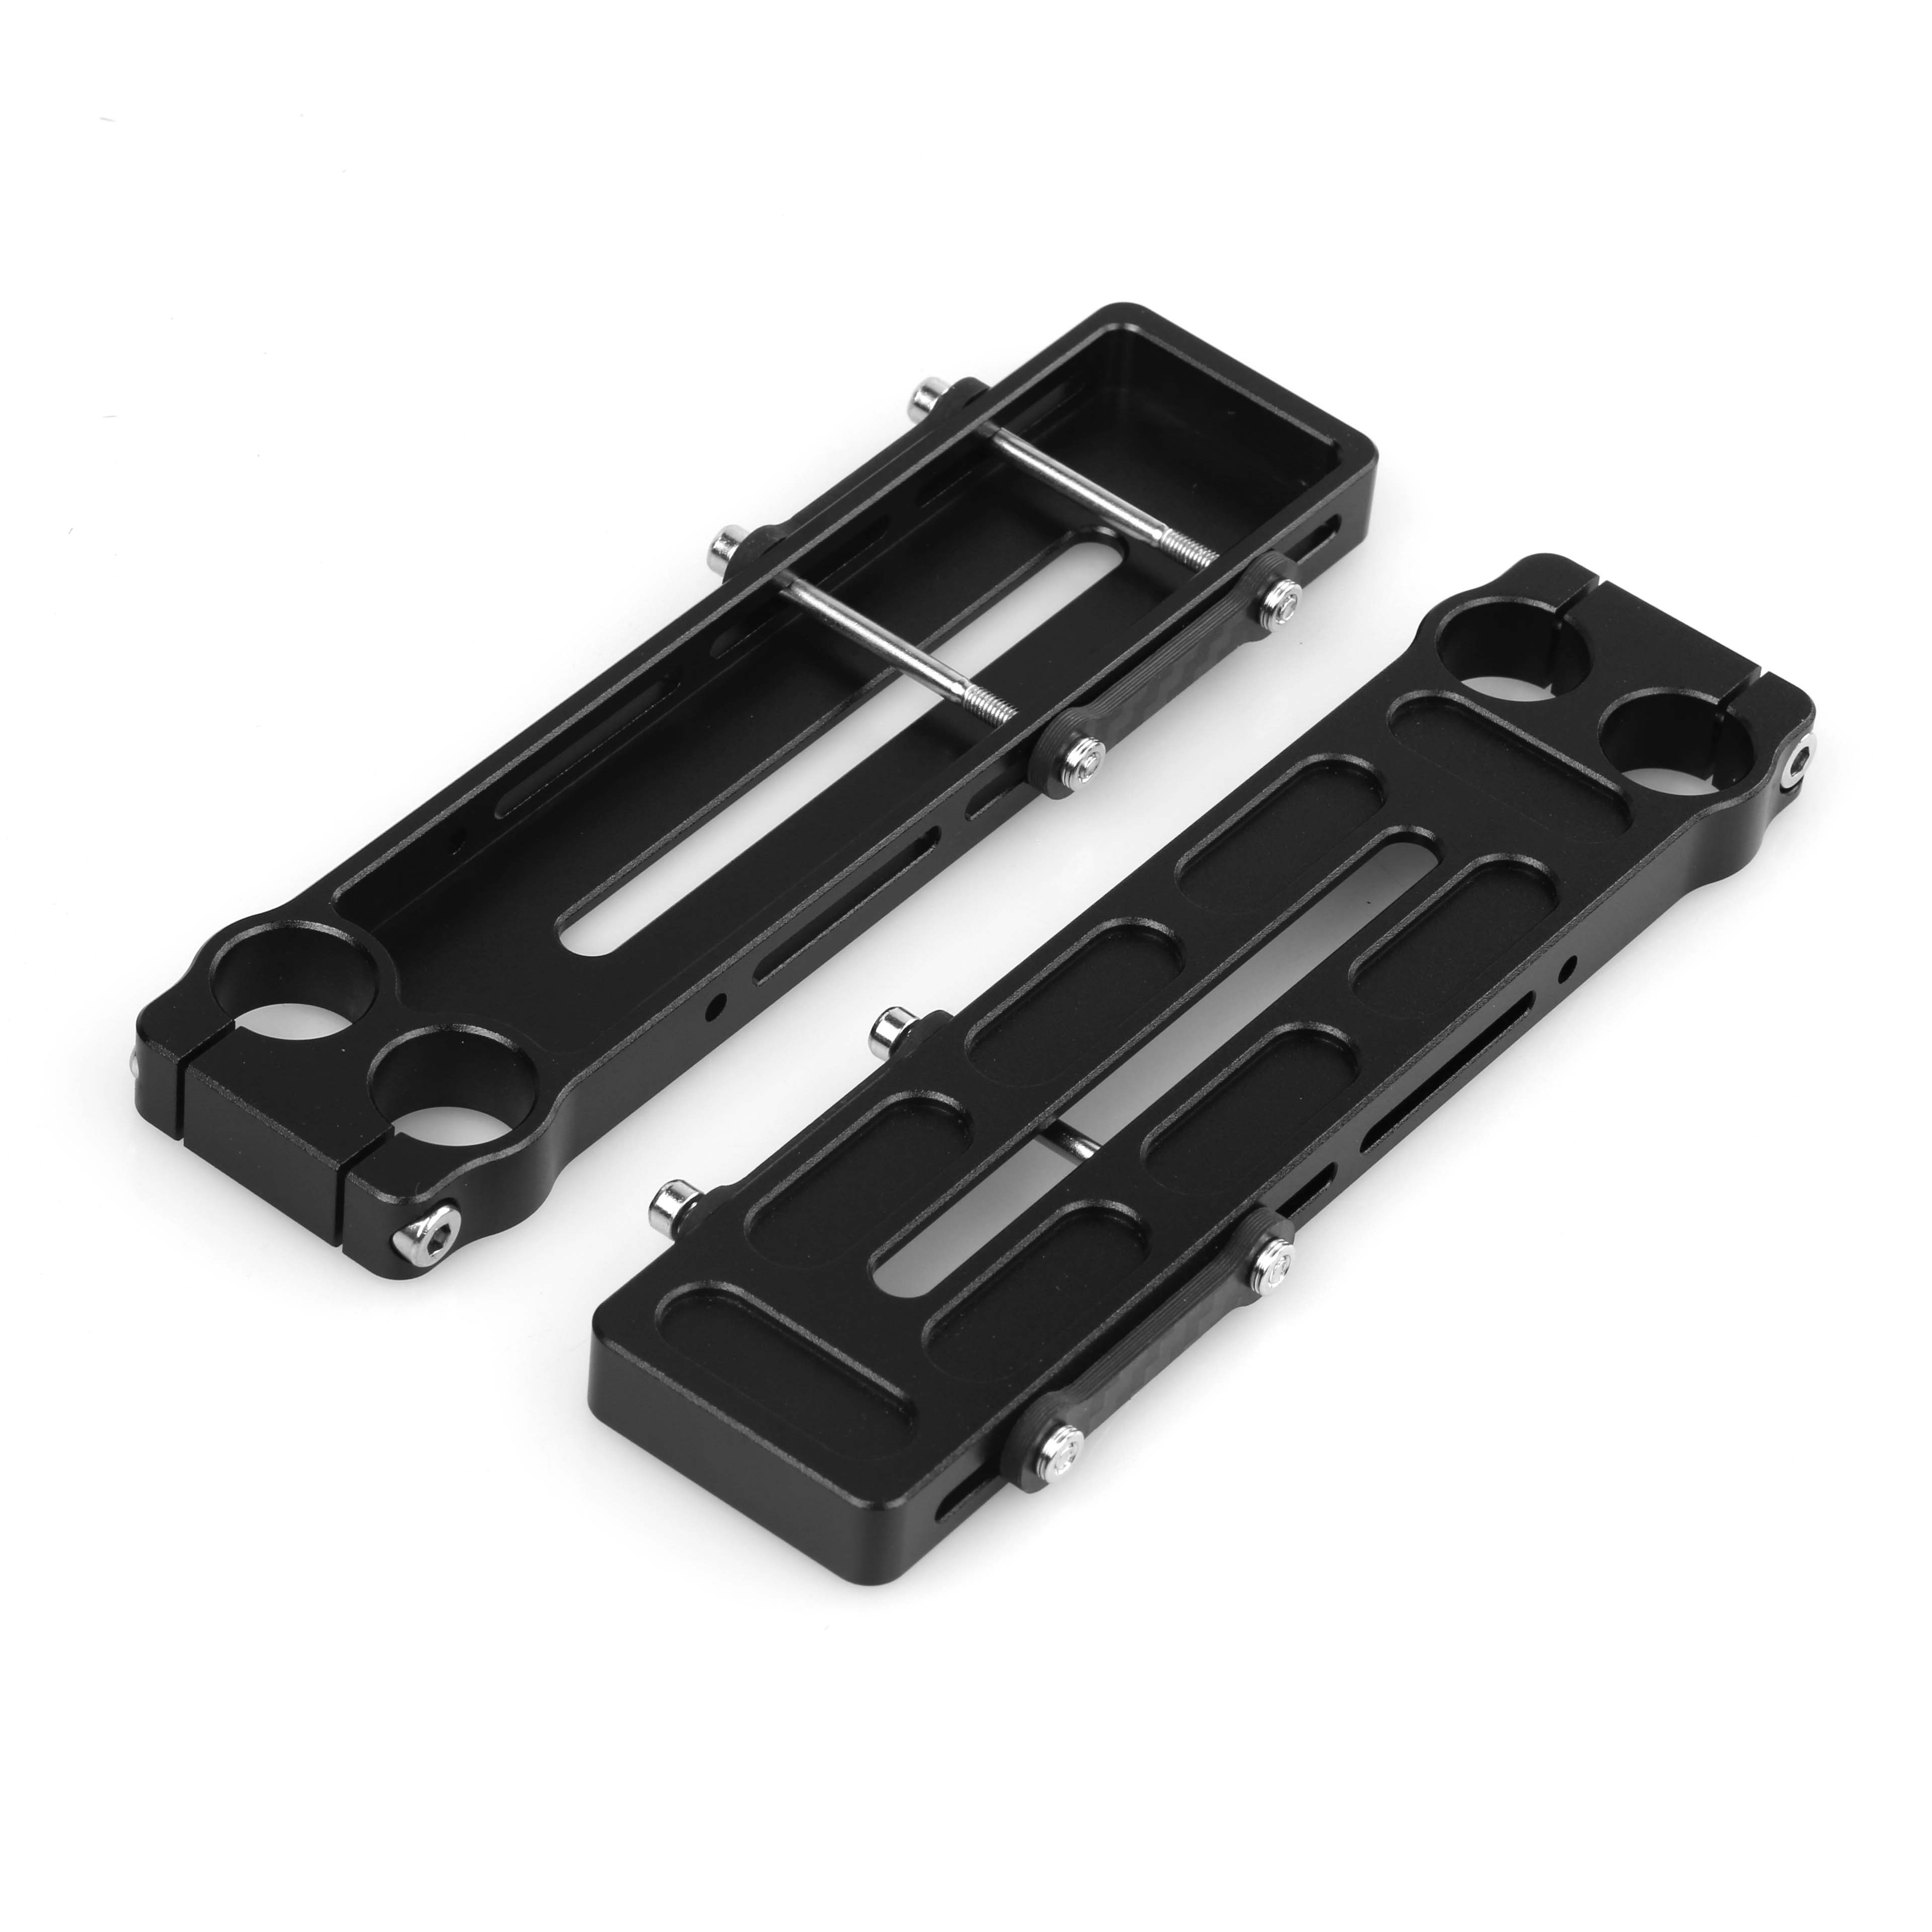 Aluminum part for camera tray tilt bar kit 2 pcs